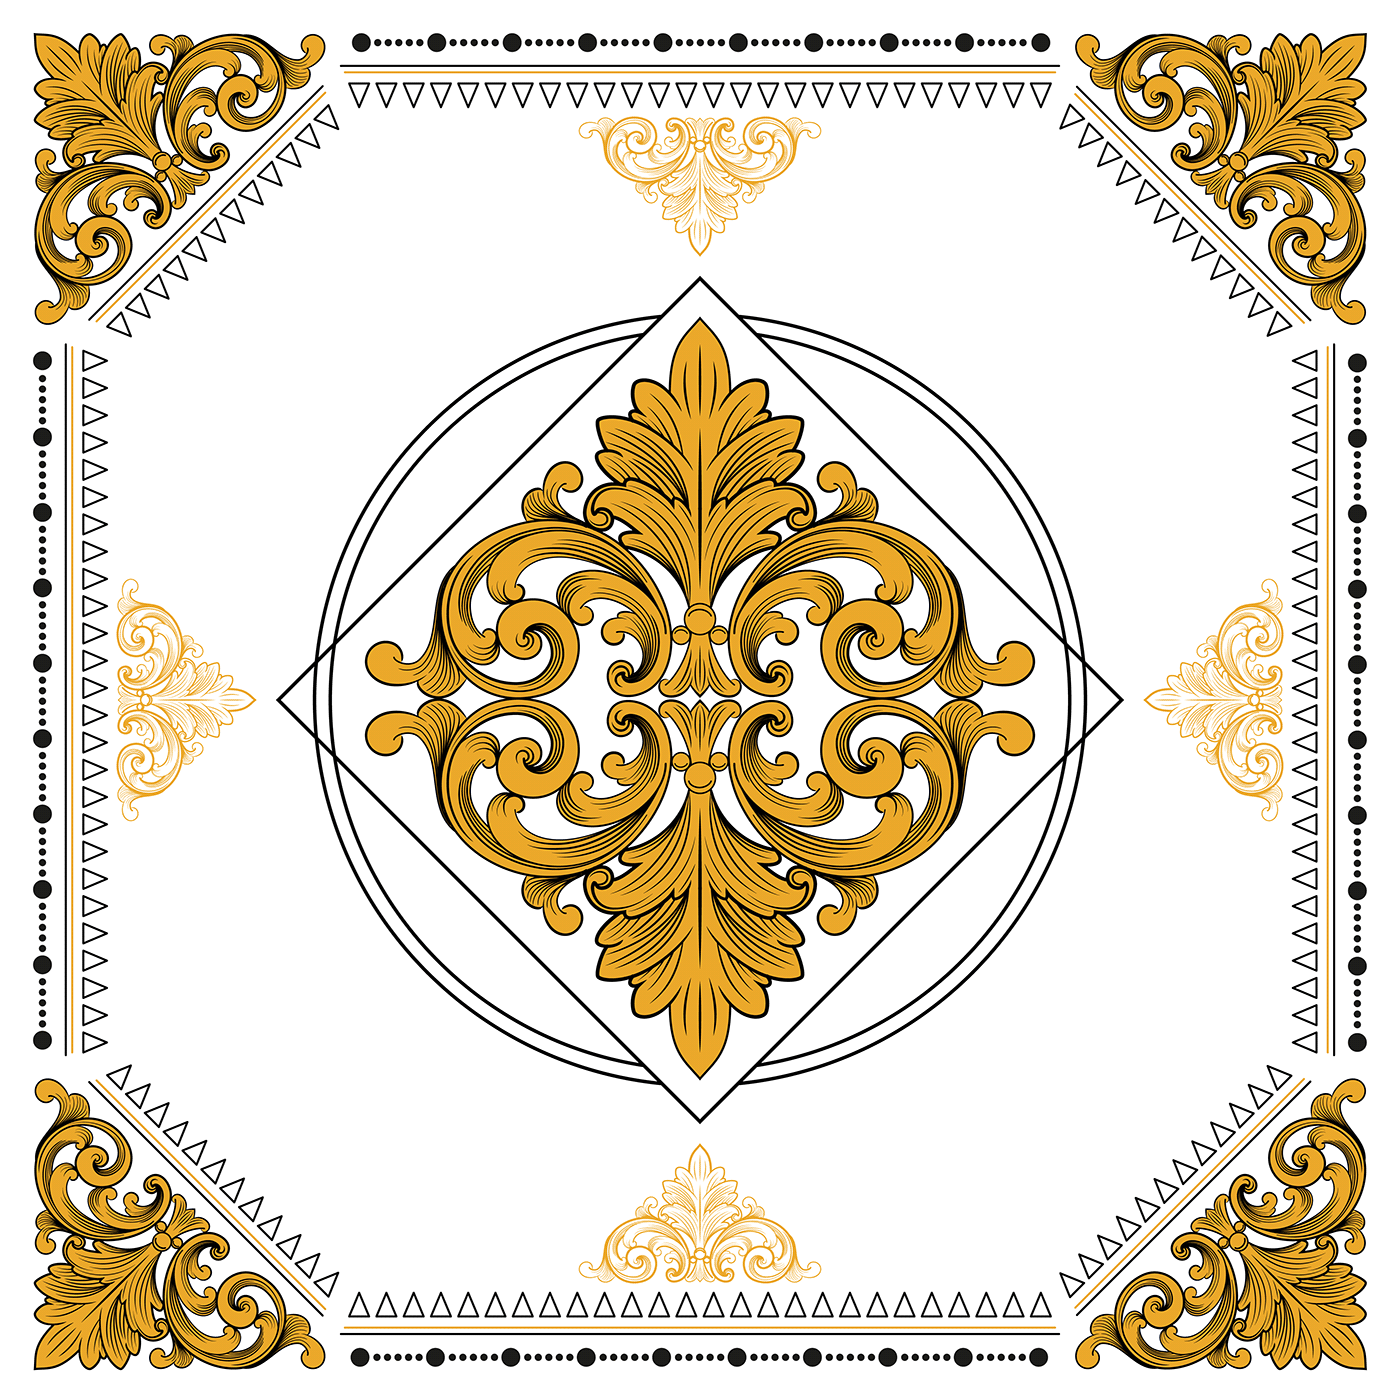 Acanthus baroque decorative elegant floral ornamental Renaissance rococo scrollwork vintage